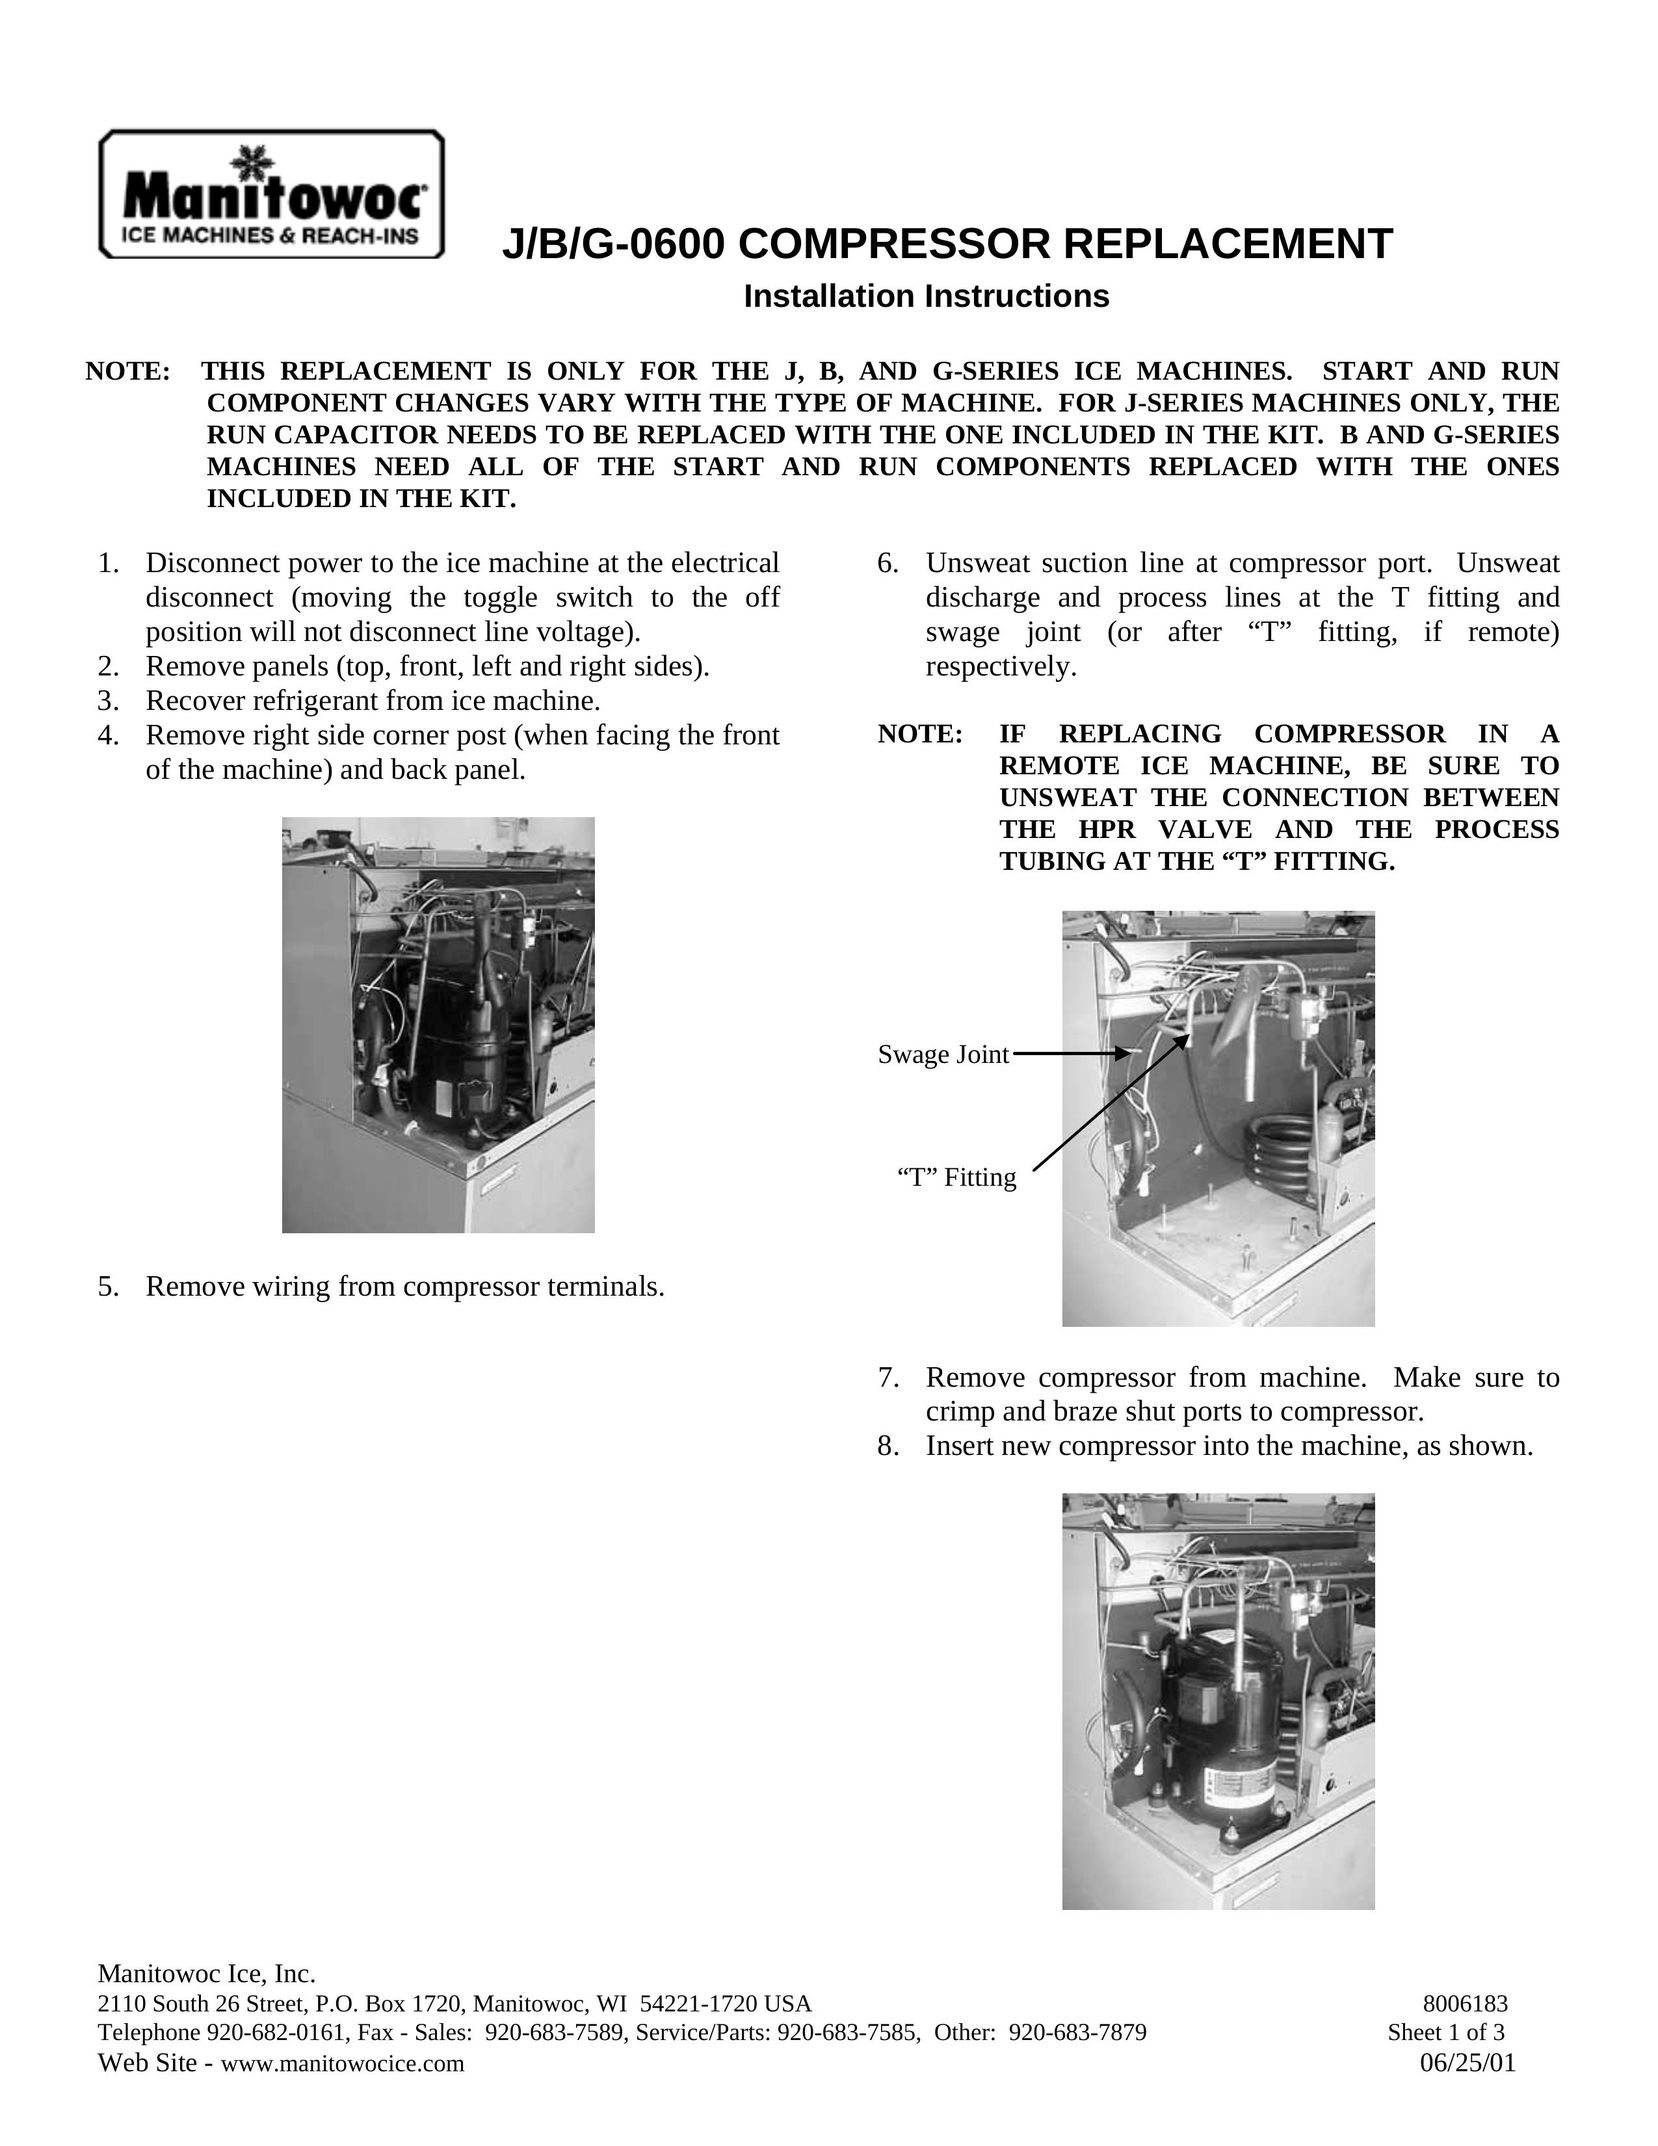 Manitowoc Ice J-0600 Air Compressor User Manual